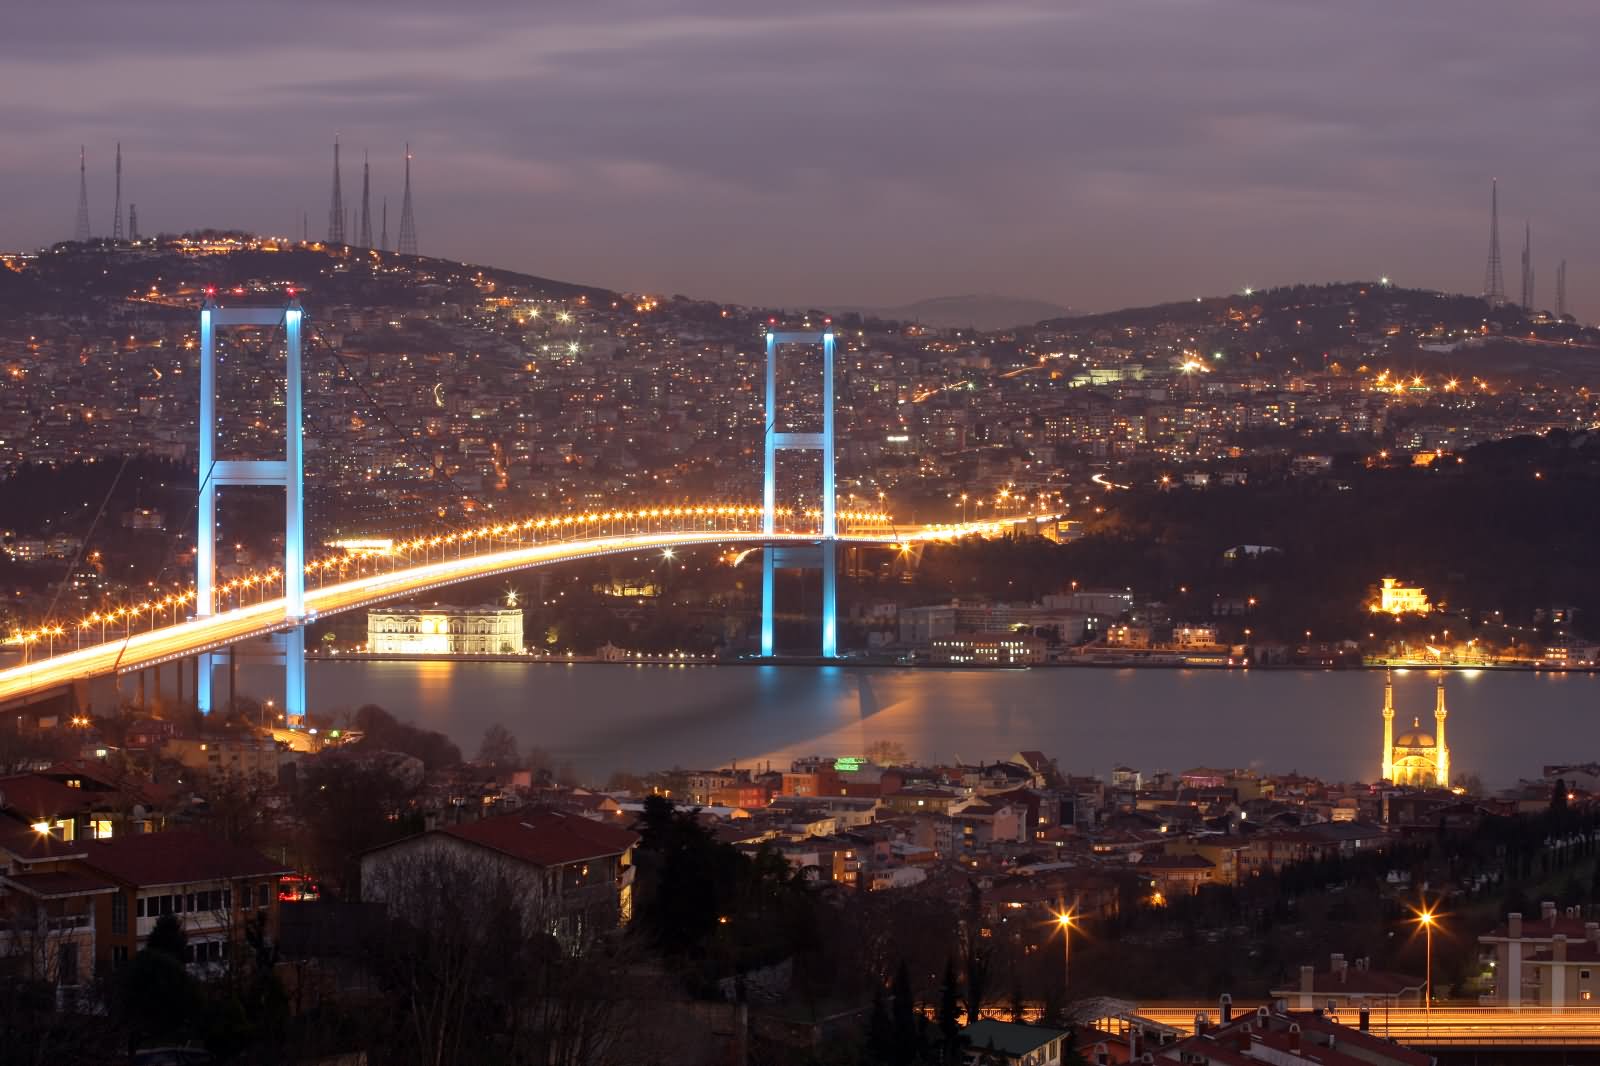 Night View Of The Bosphorus Bridge At Night